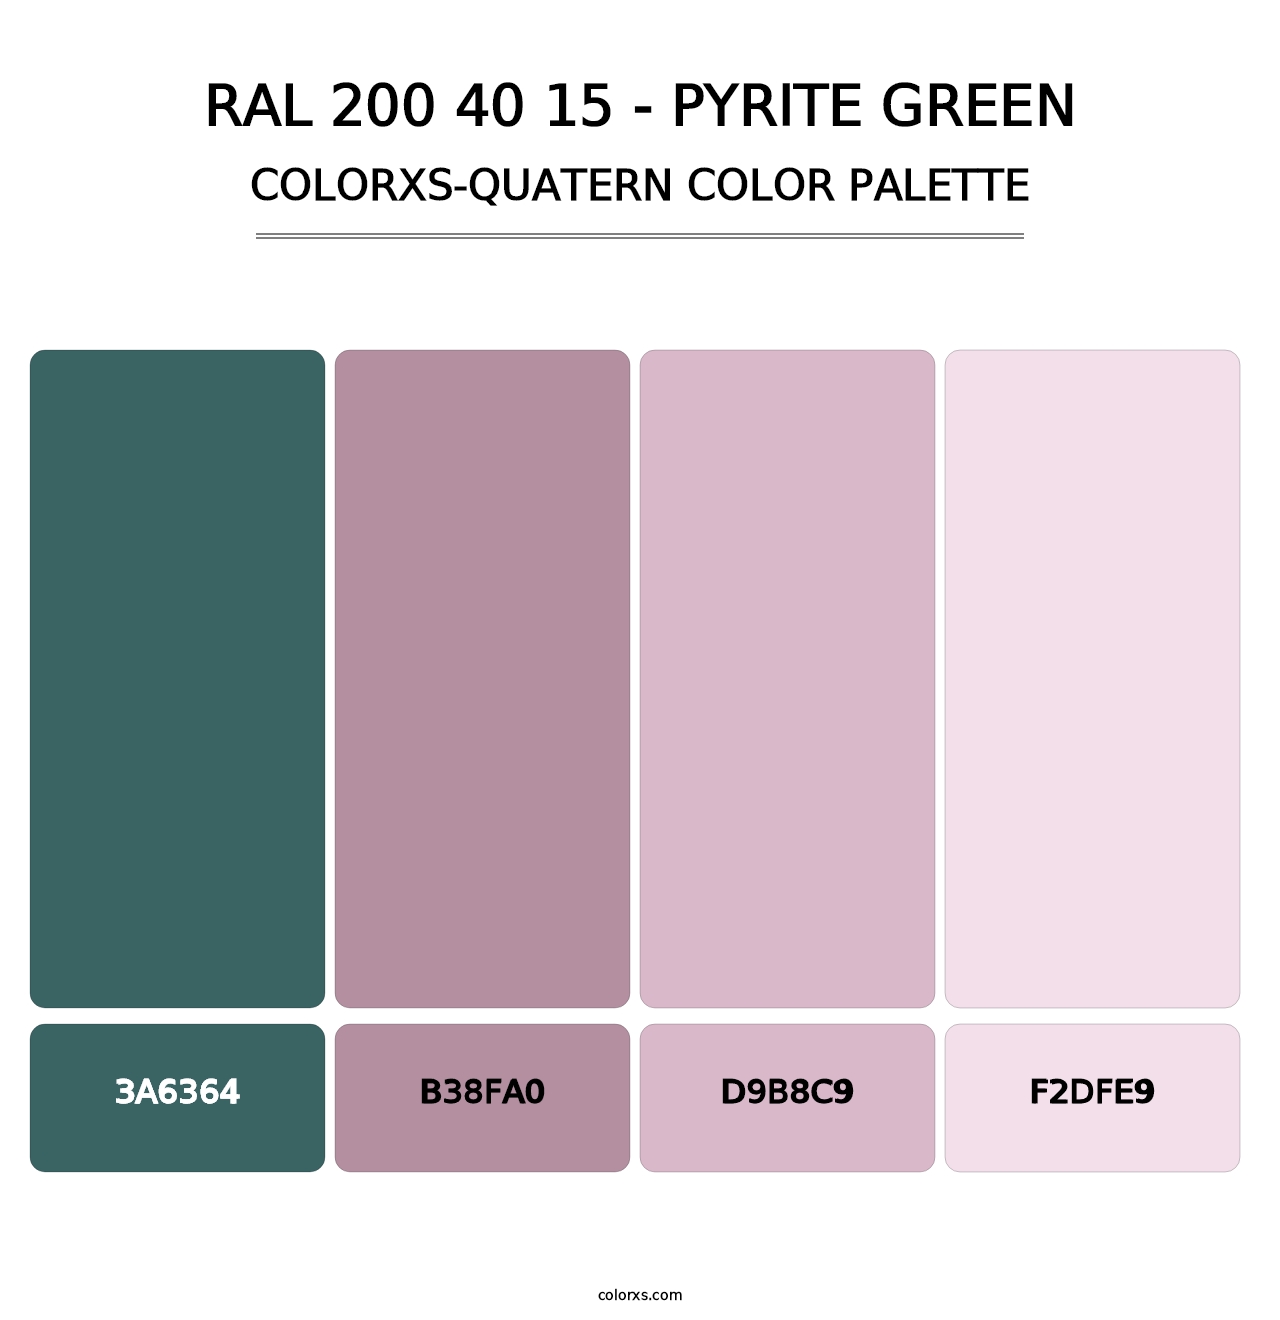 RAL 200 40 15 - Pyrite Green - Colorxs Quatern Palette